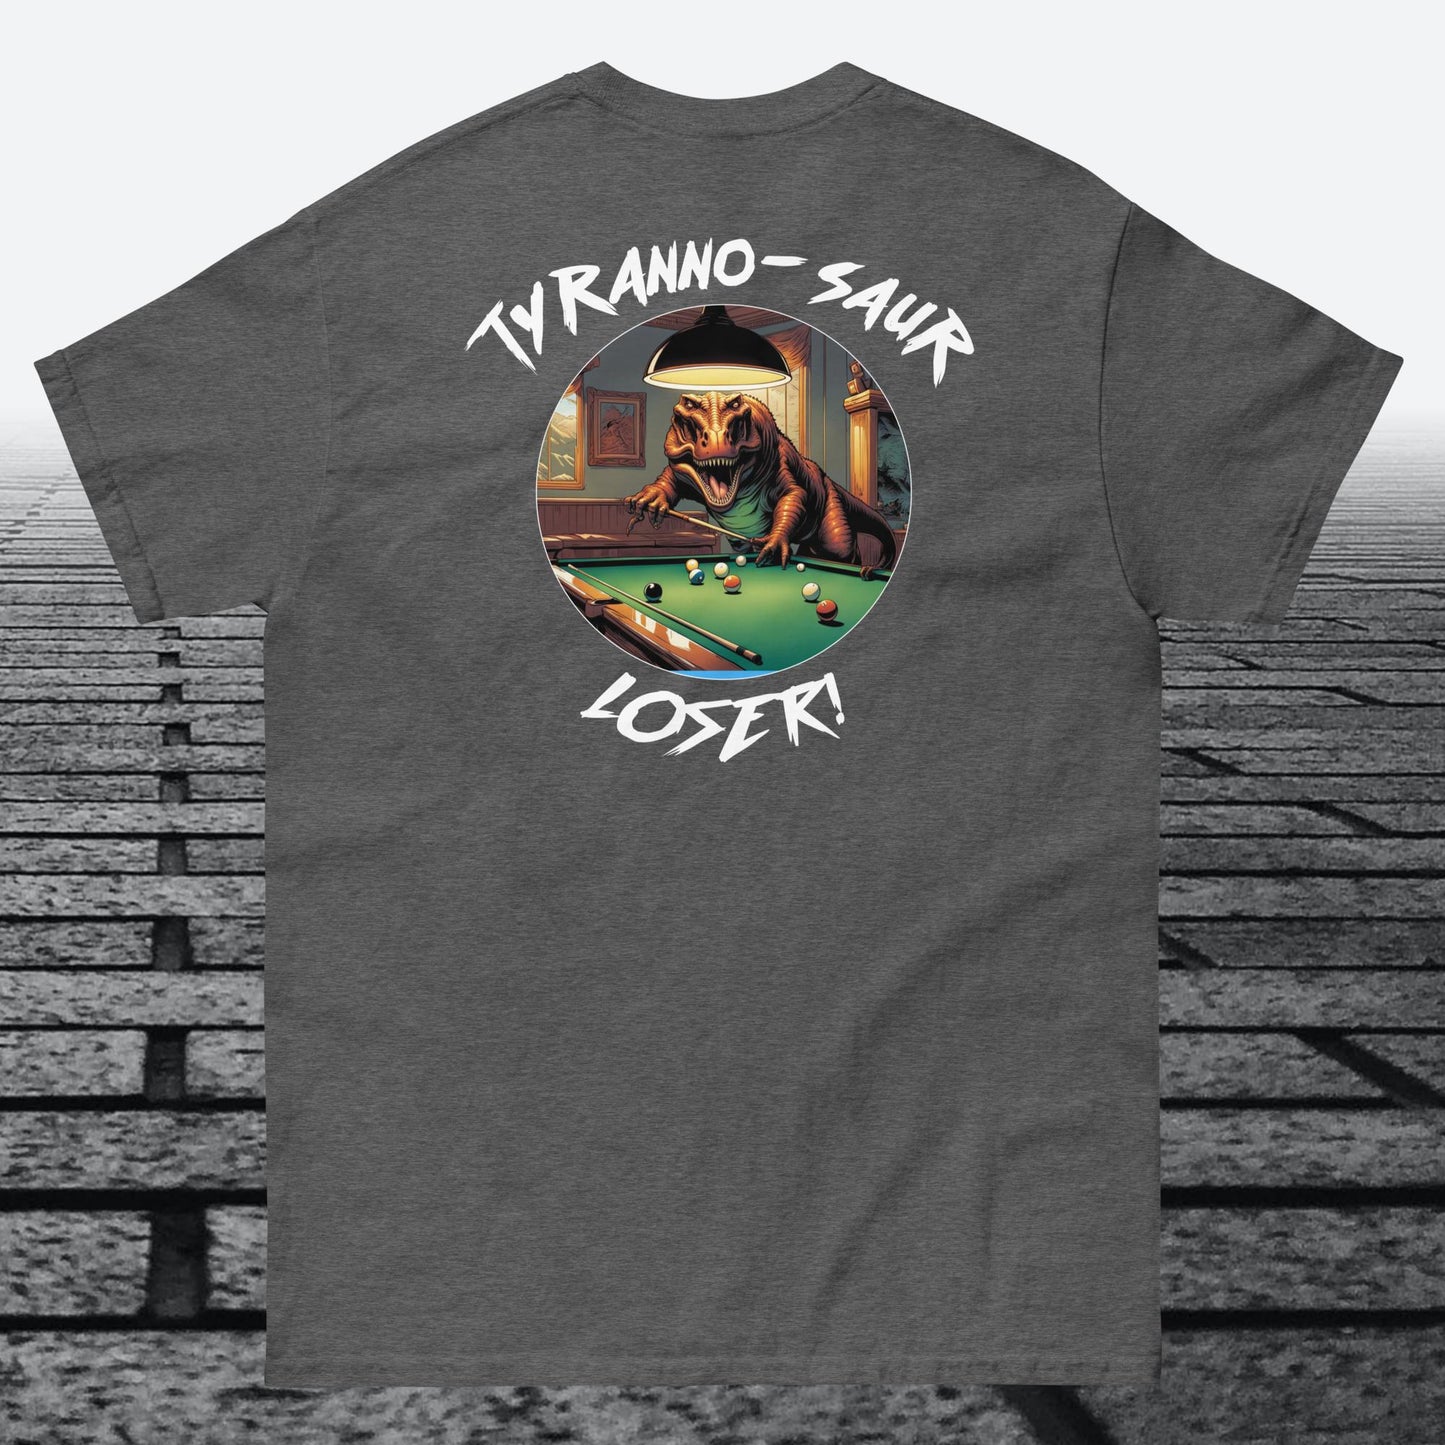 Tyranno-Saur Loser, Logo on the front, Cotton t-shirt